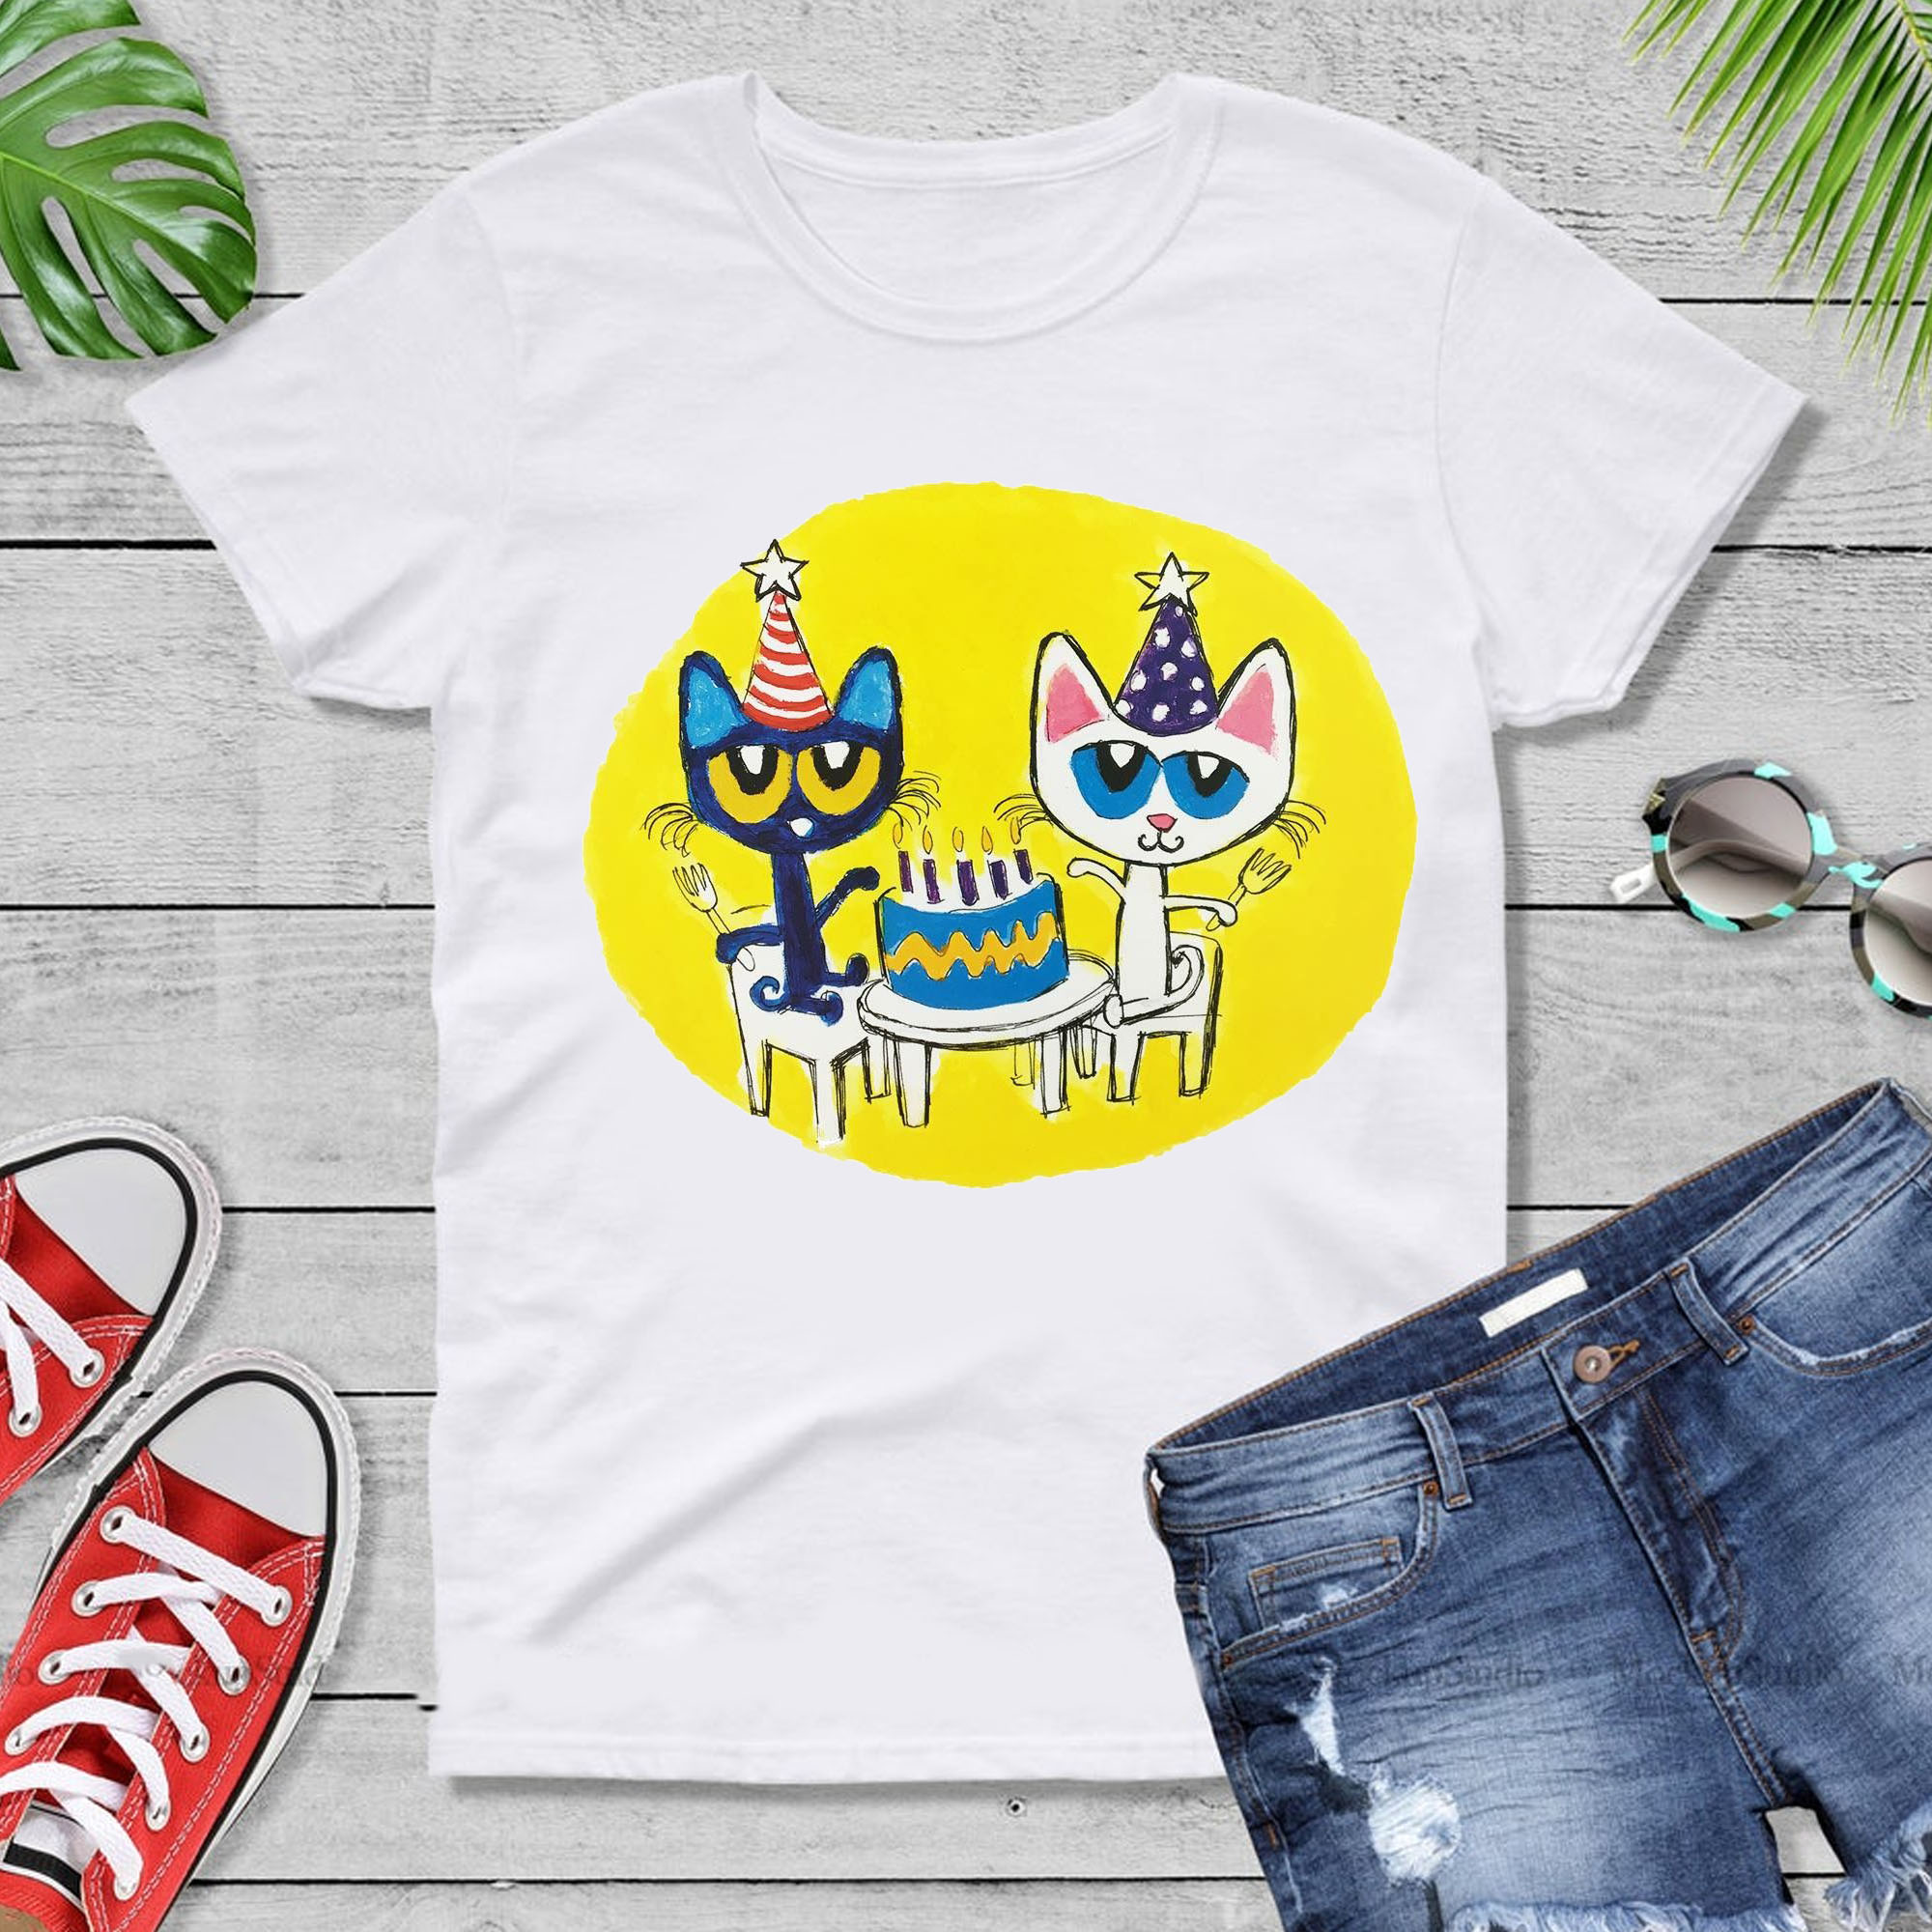 Pete The Cat Shirt, Pete The Cat Birthday Shirt, Pete The Cat Inspired Shirt